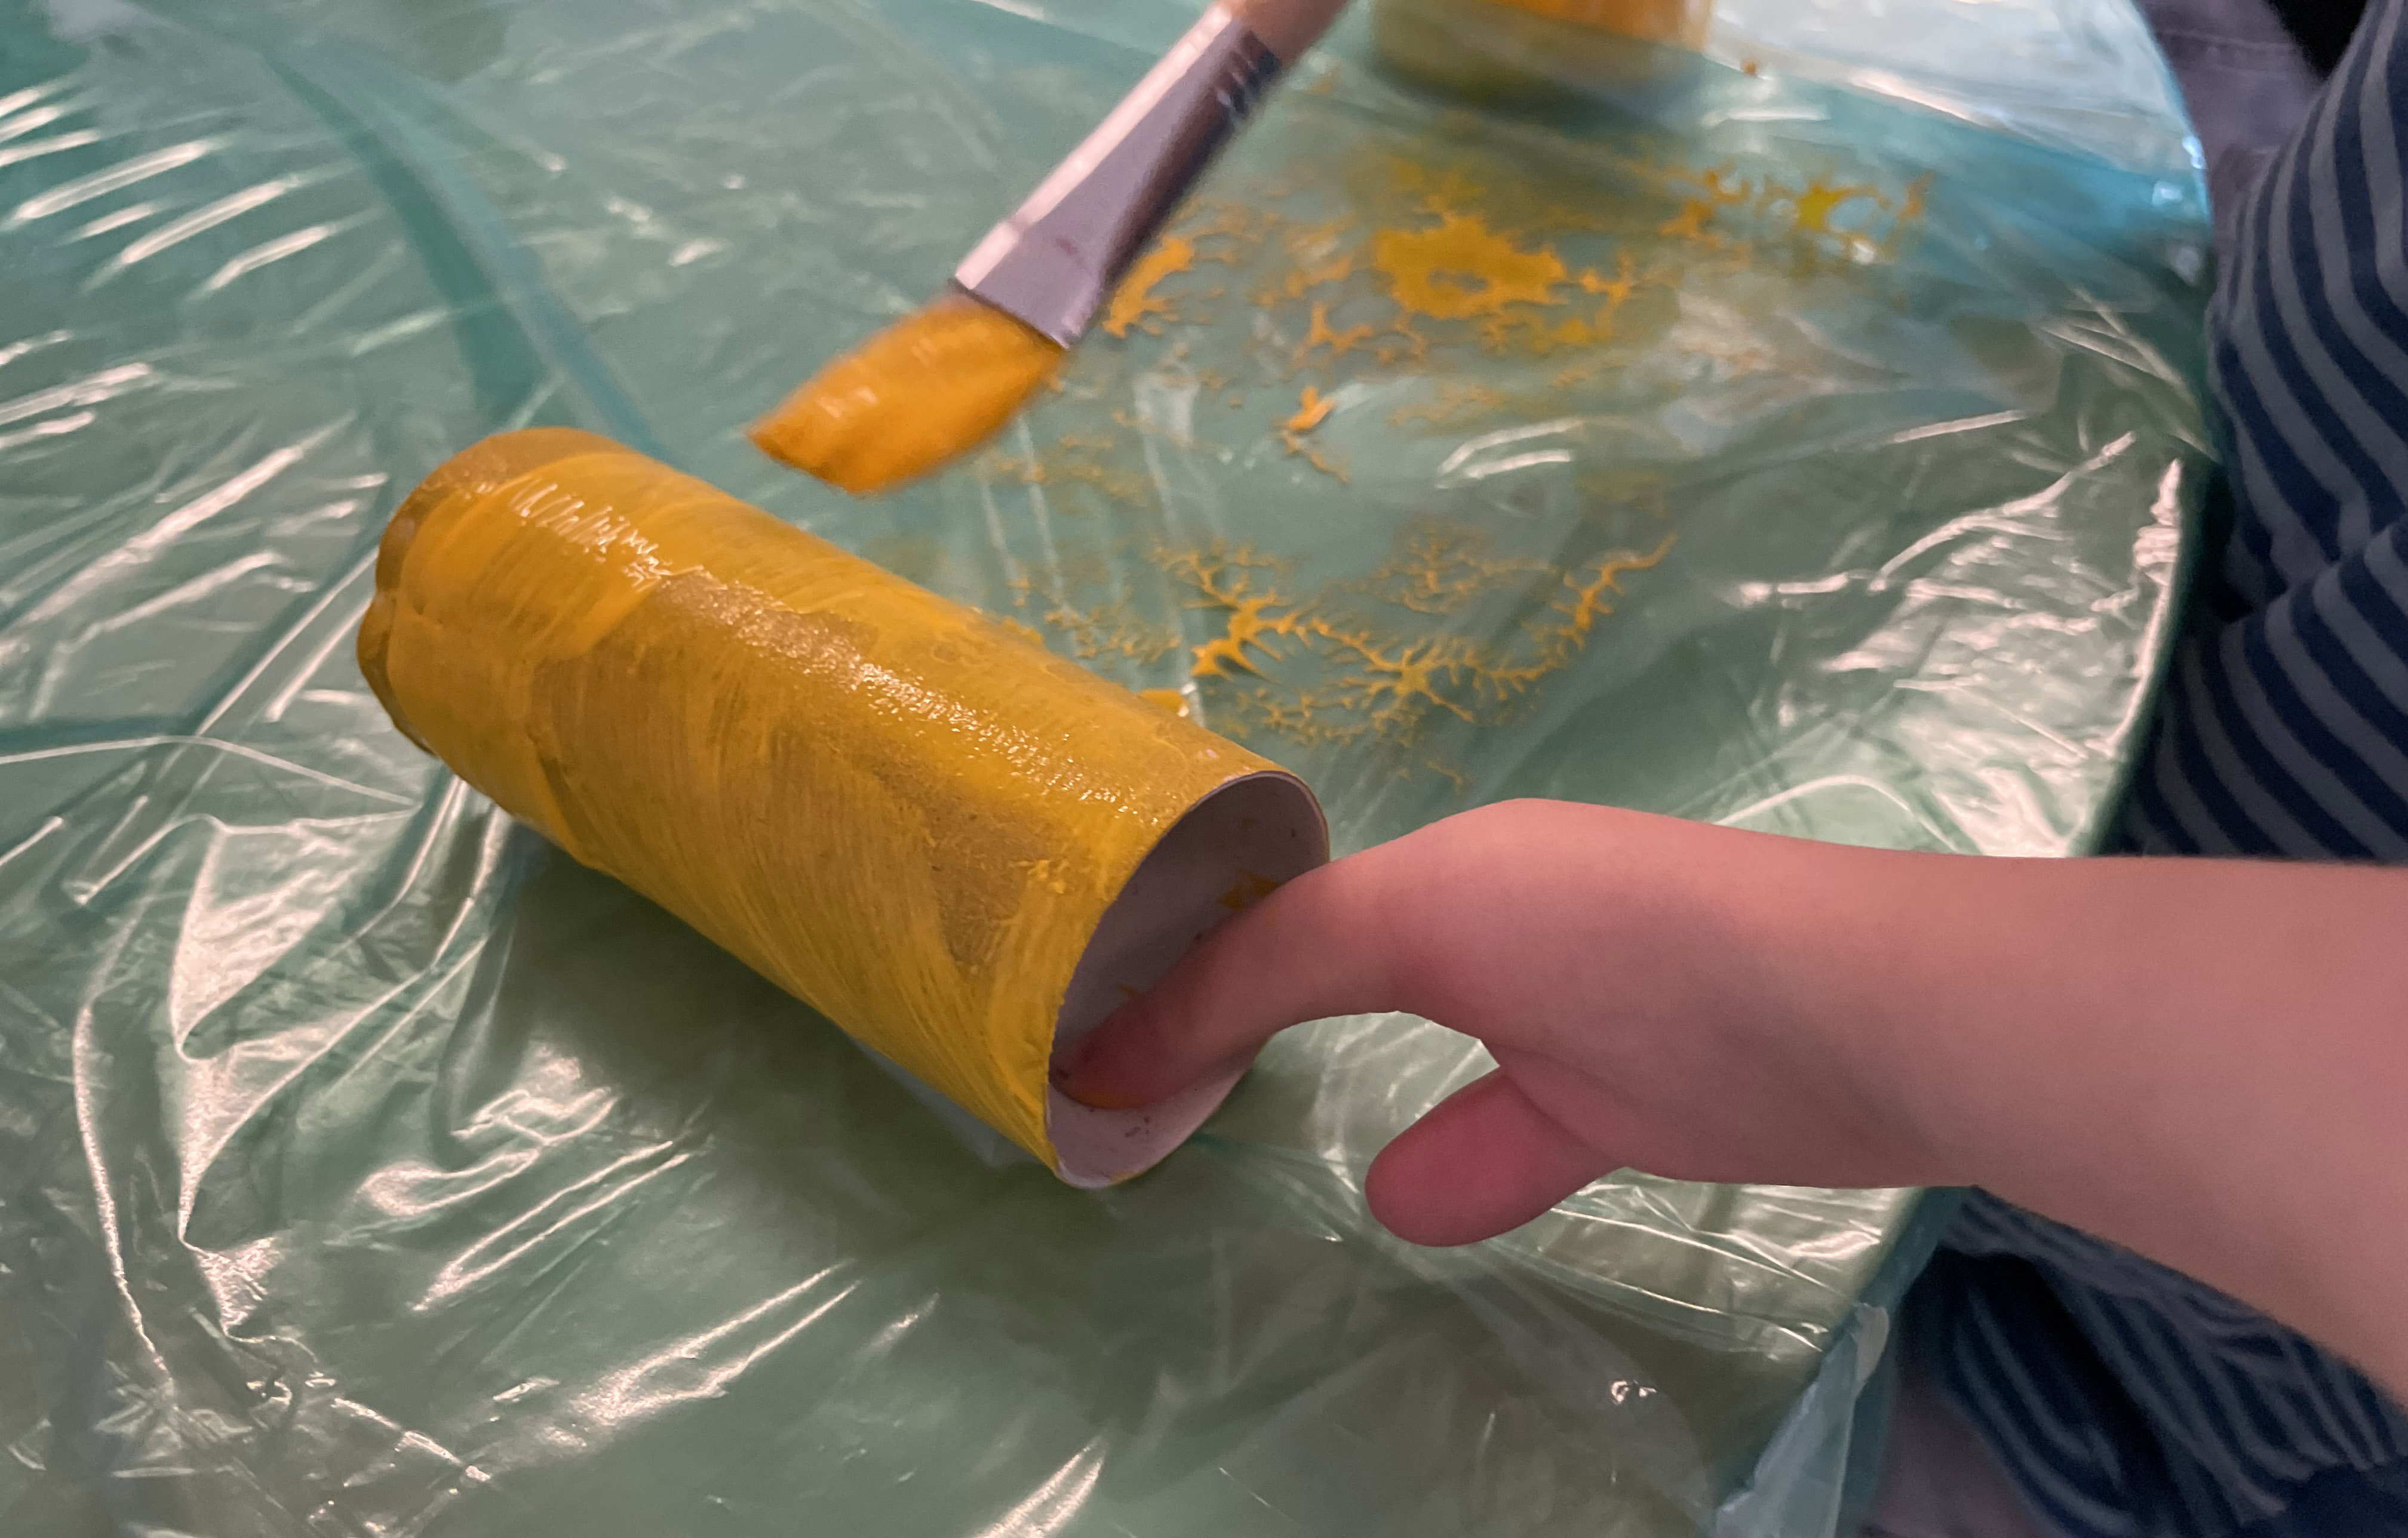 Barnhand med dysmeli som målar en toarulle gul